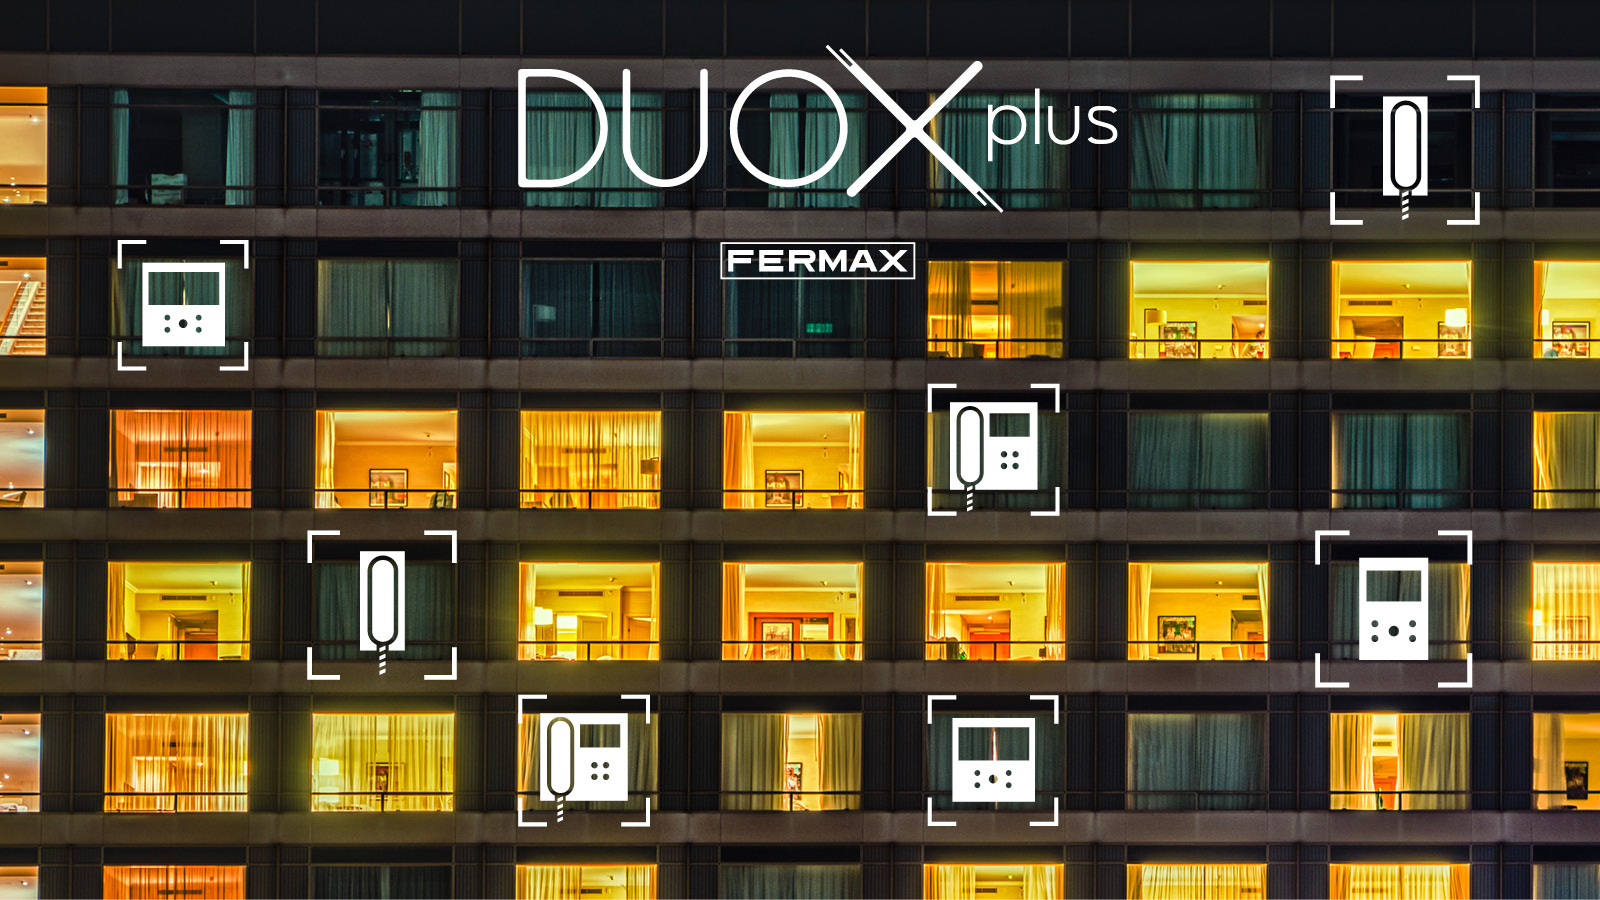 Duox Plus technology